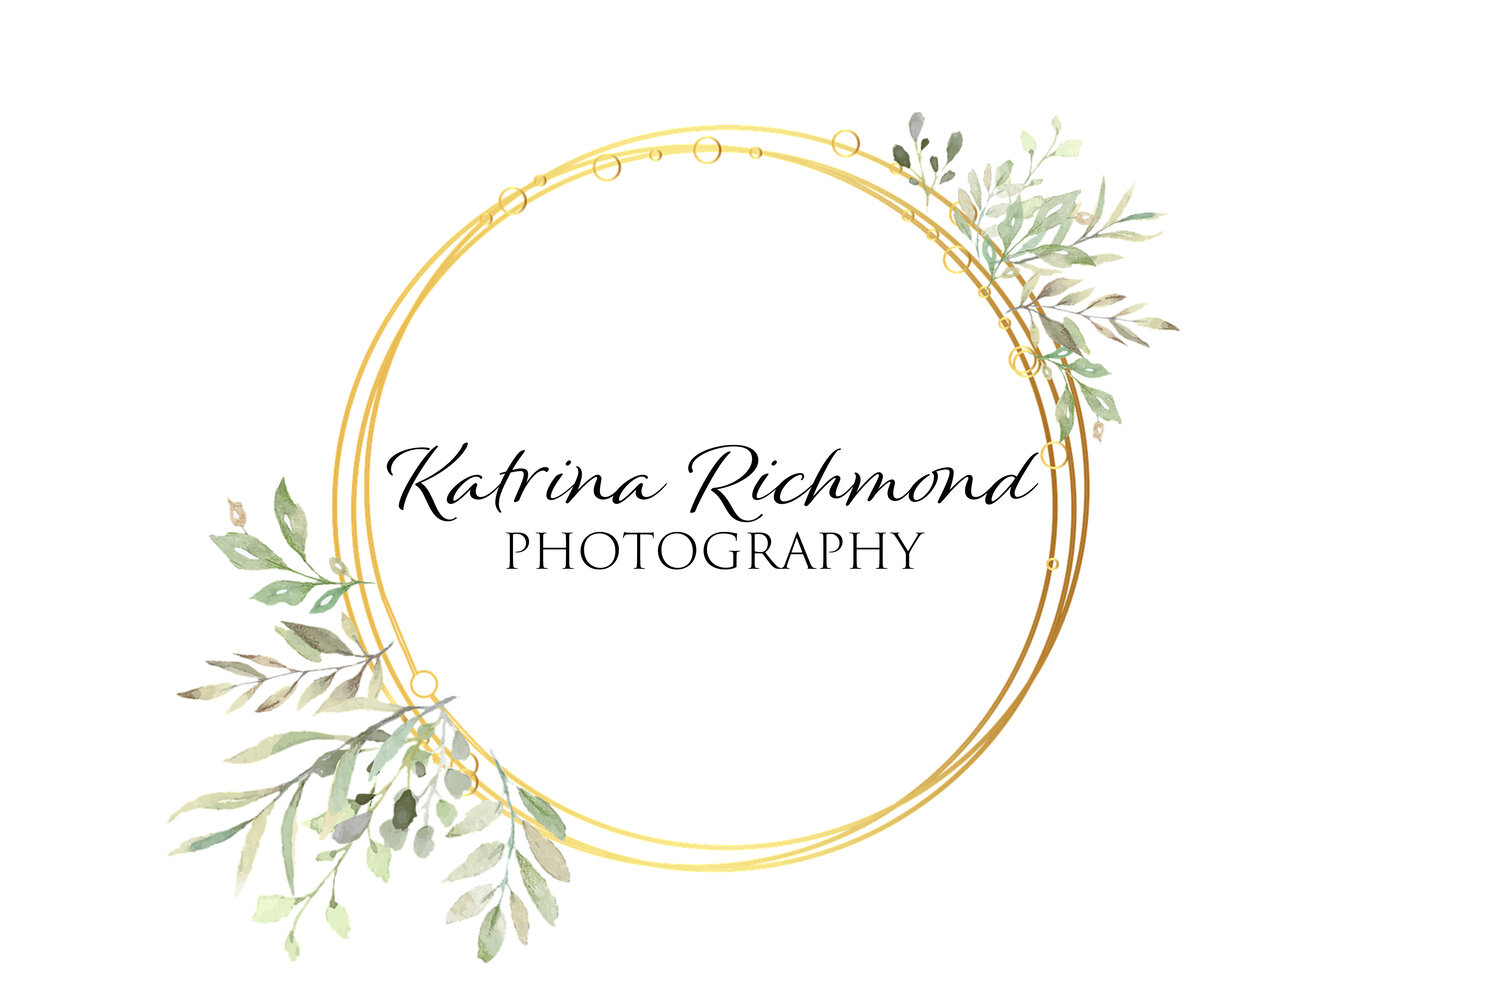 Katrina Richmond Photography